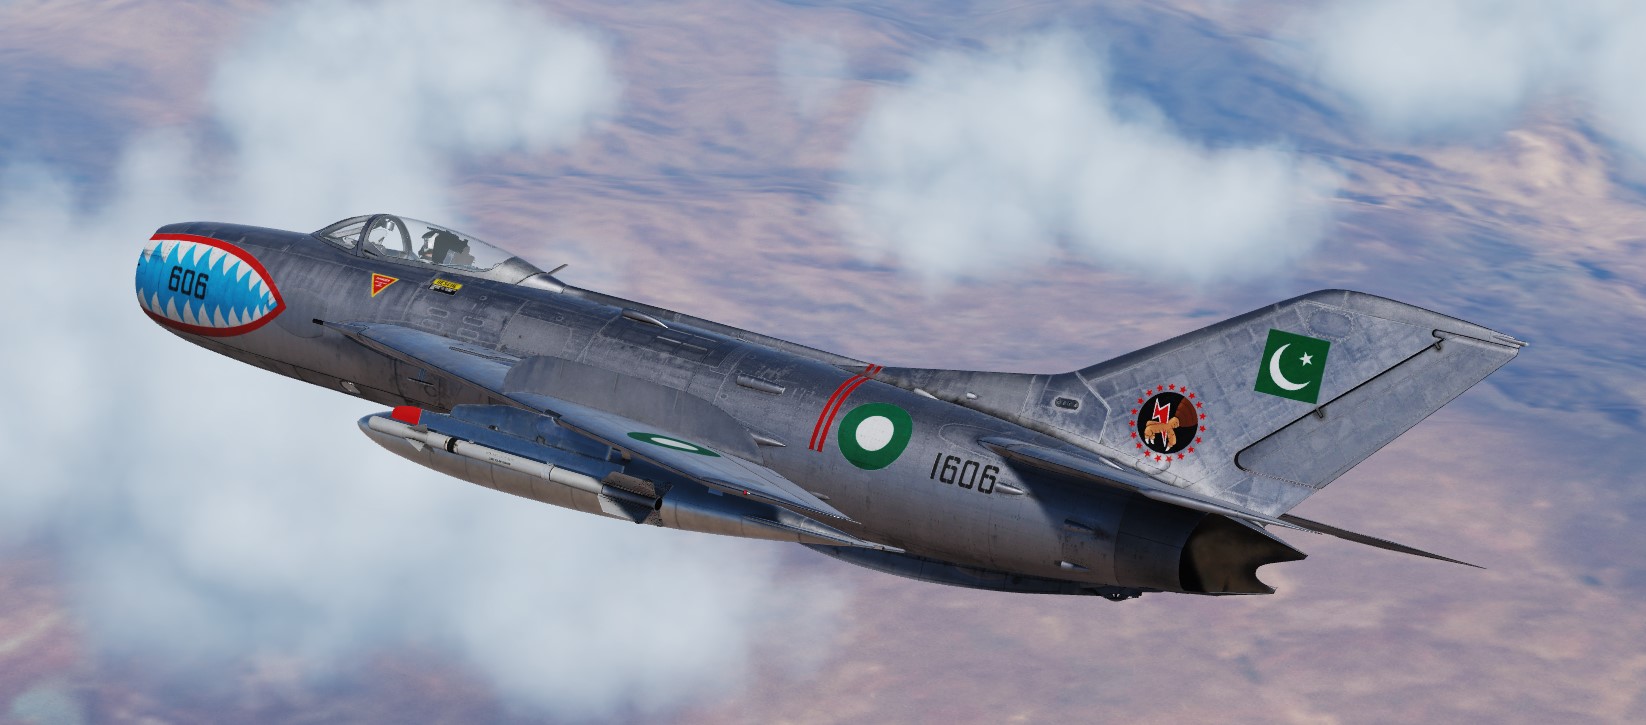 MiG-19/Shenyang F-6 Pakistan Air Force 23 Squadron "Talons"